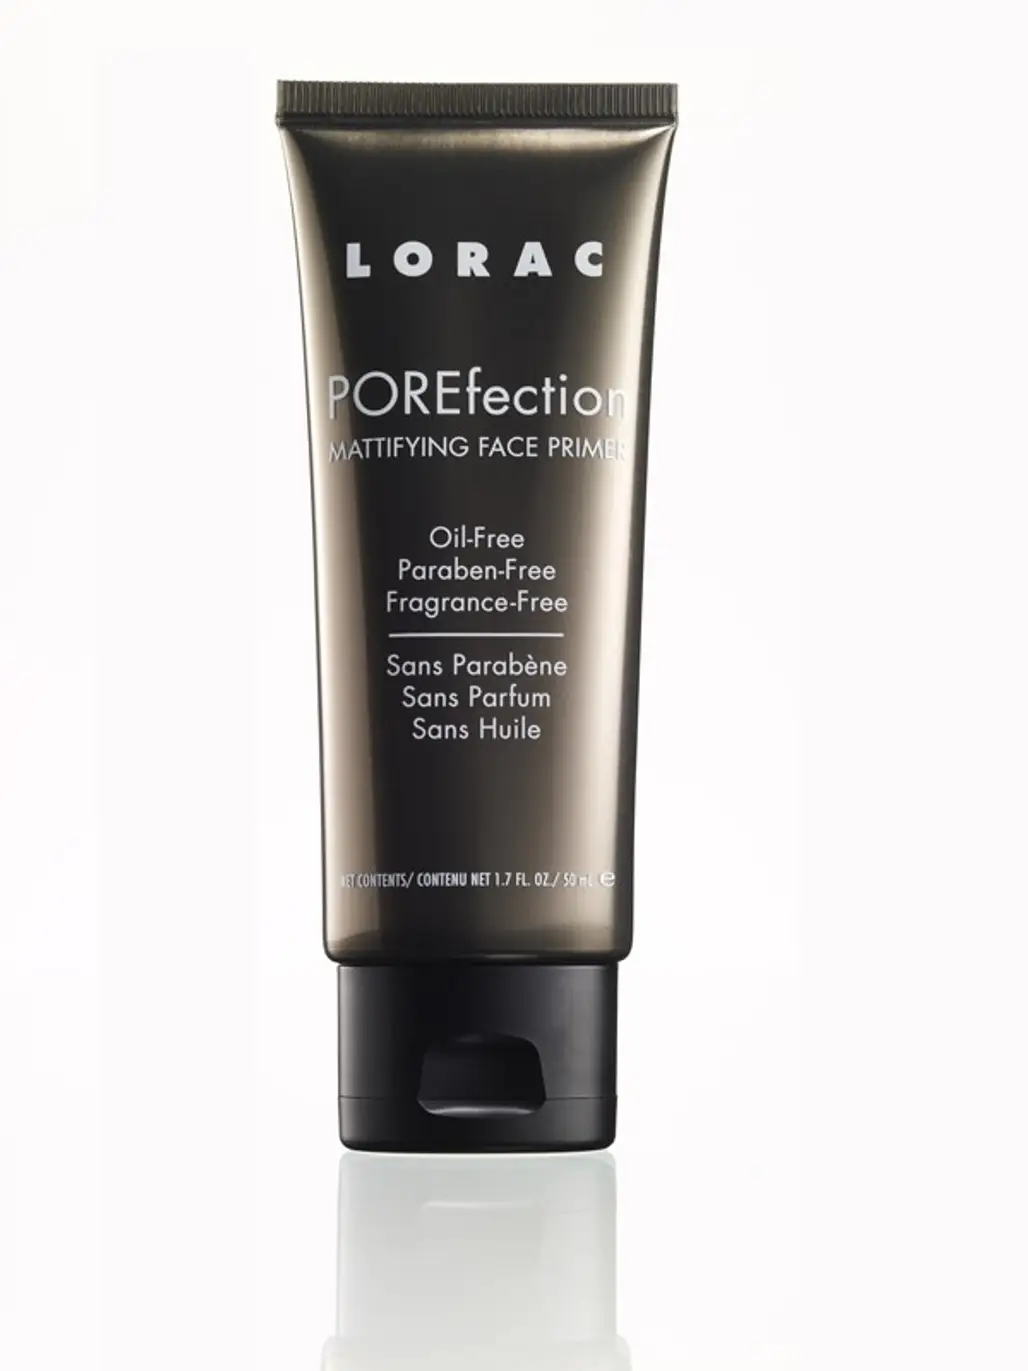 Lorac Proefection Mattifying Face Primer